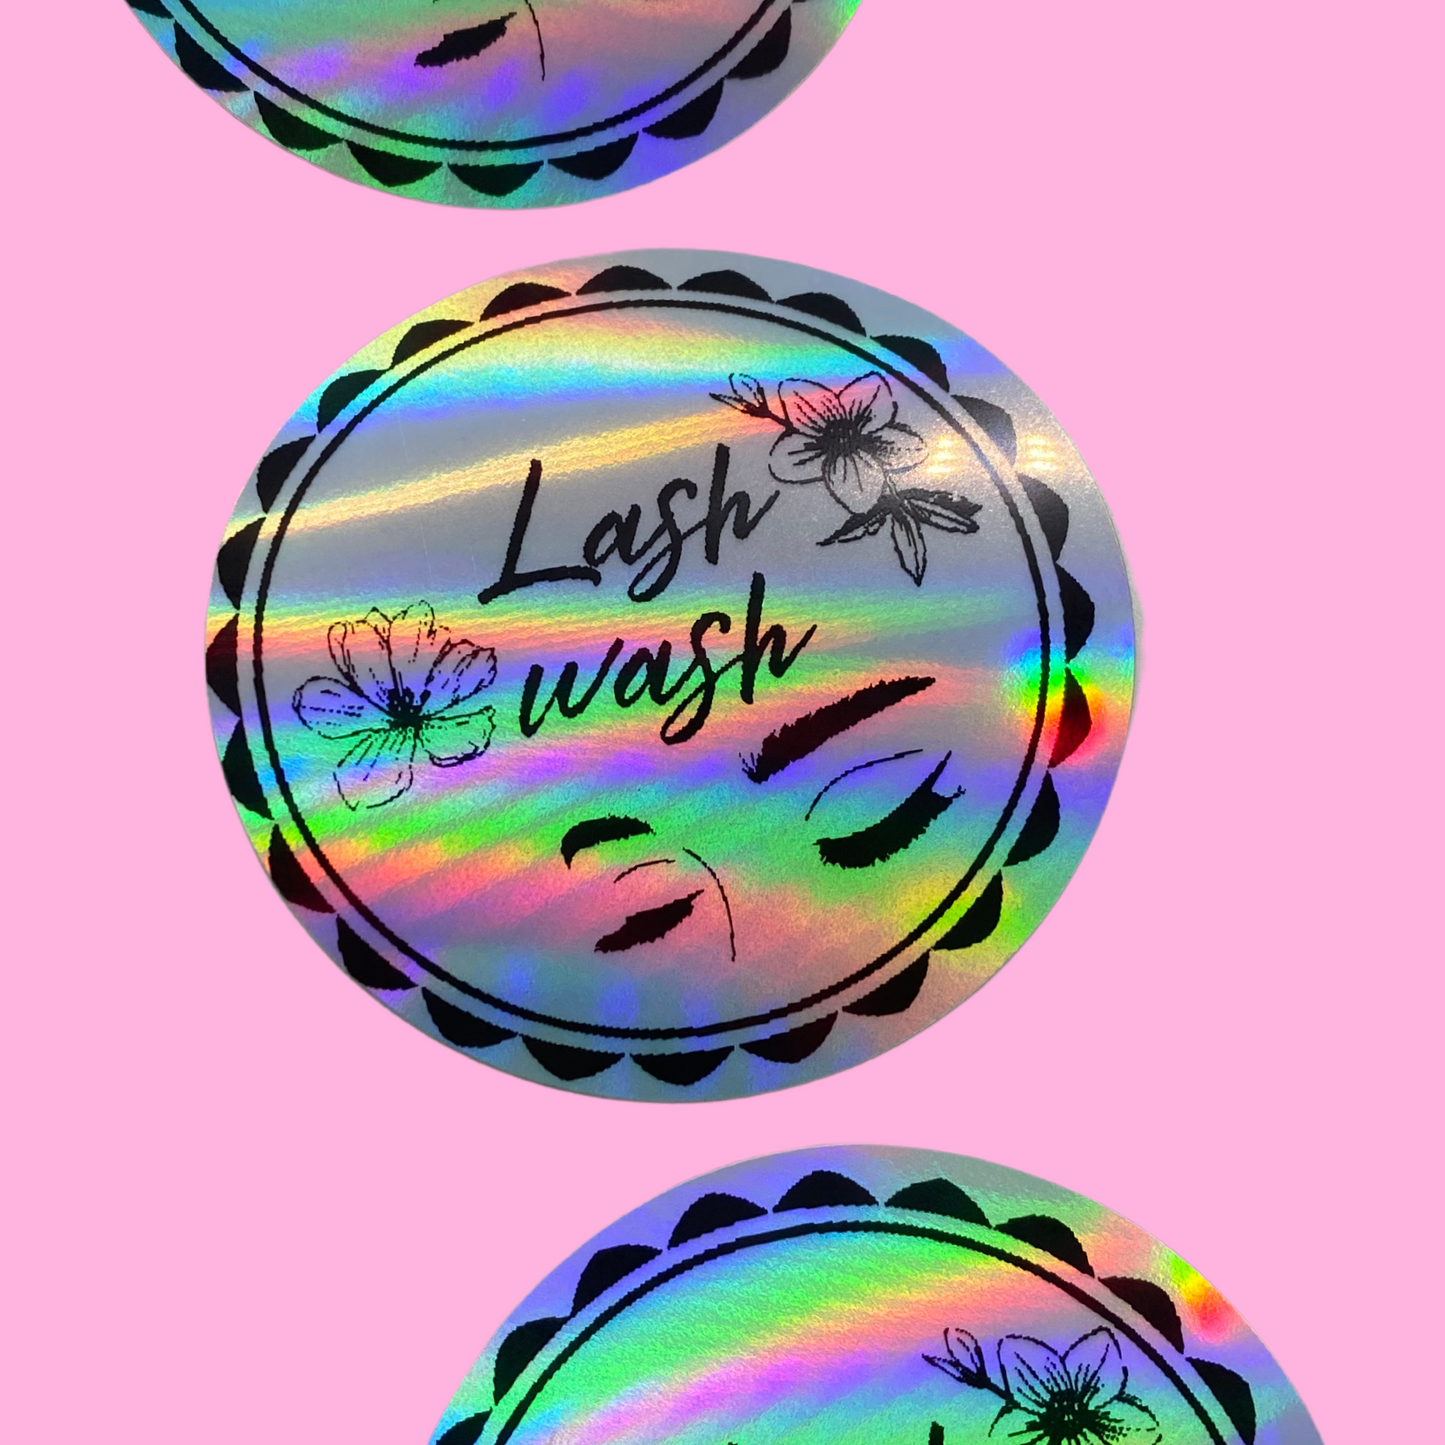 2" round holographic lash wash labels